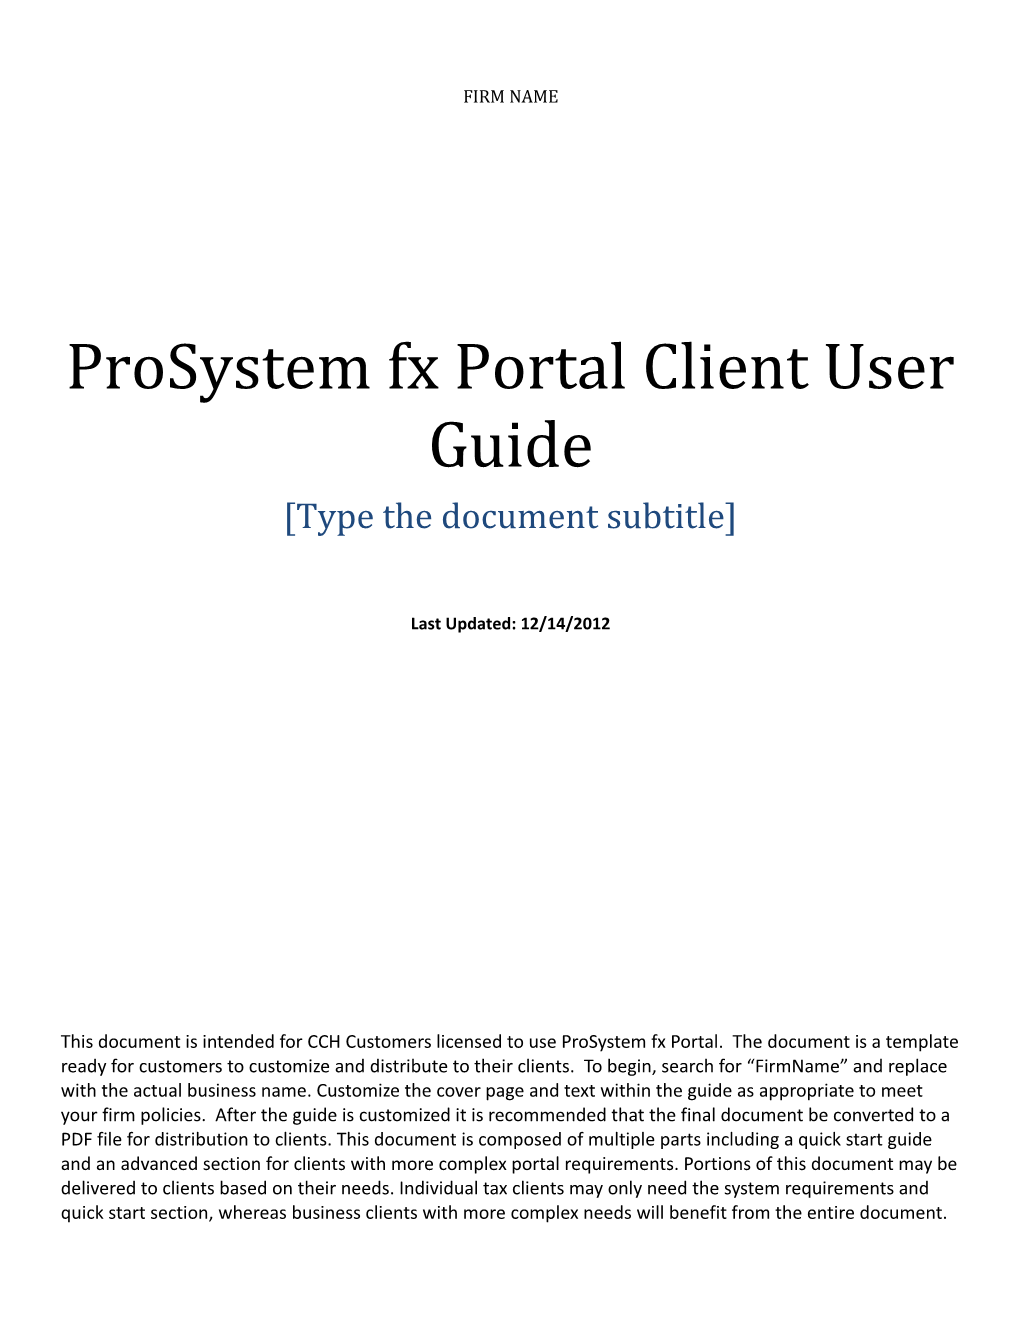 Prosystem Fx Portal Client User Guide